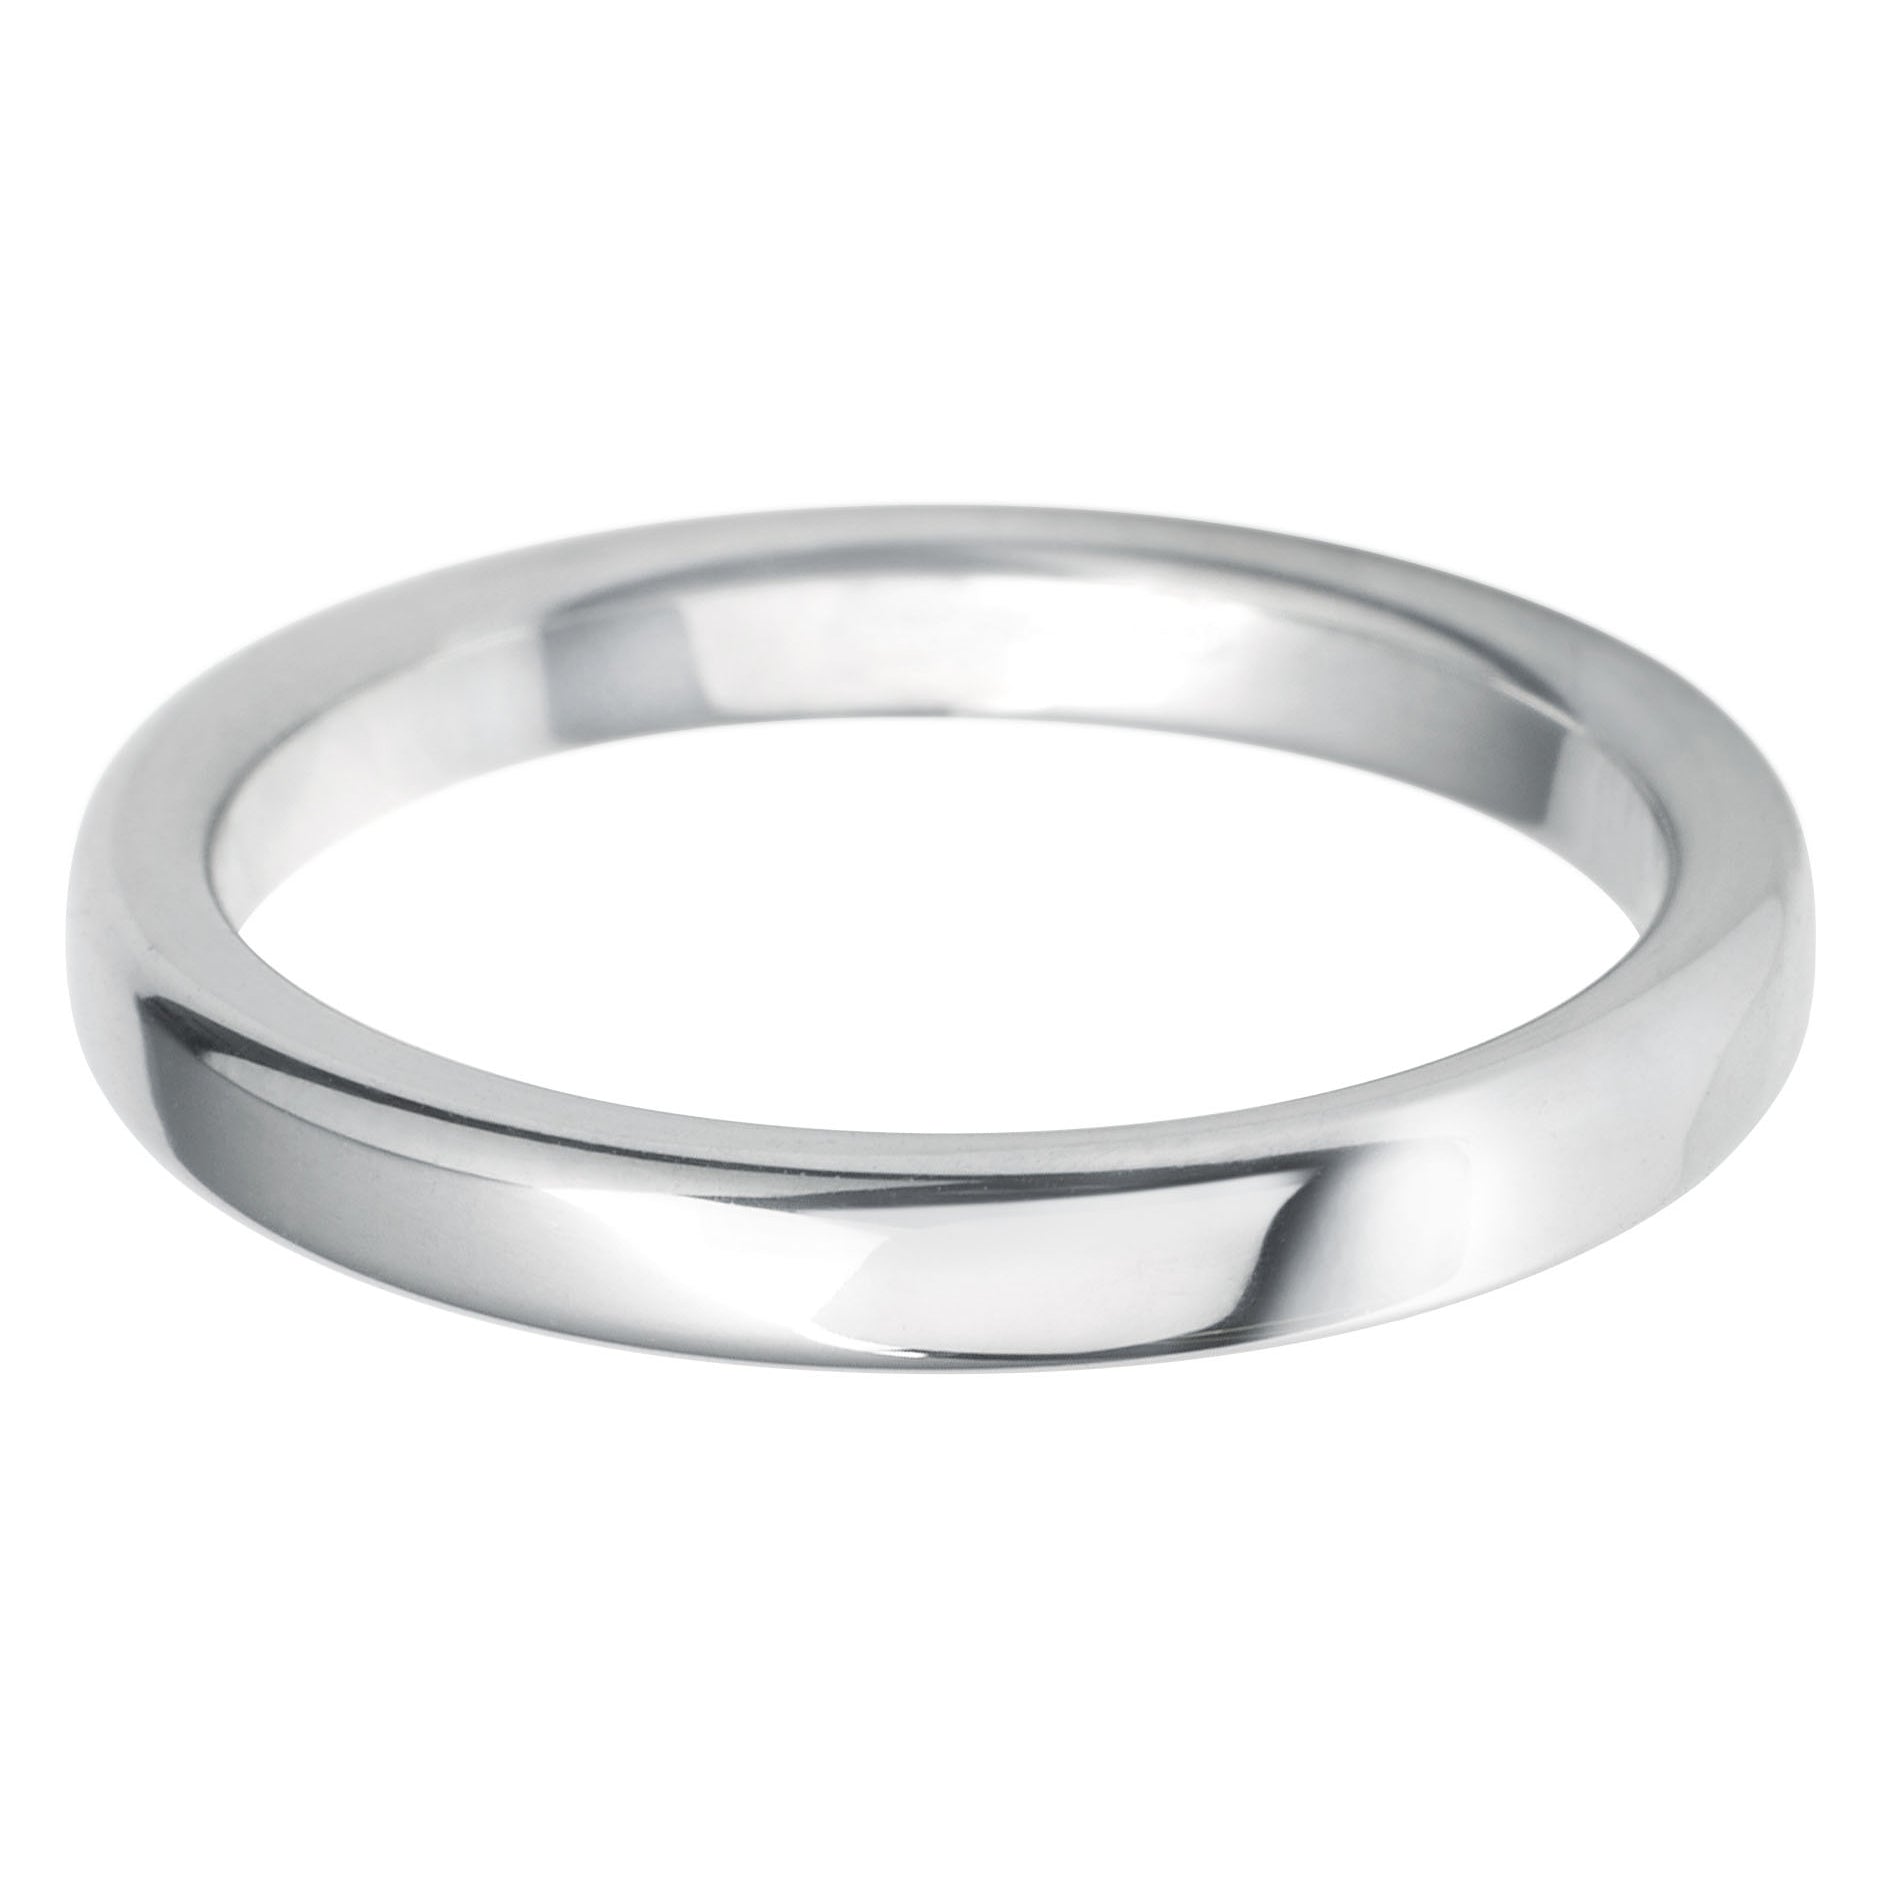 2mm Rounded Flat Medium Weight Wedding Ring